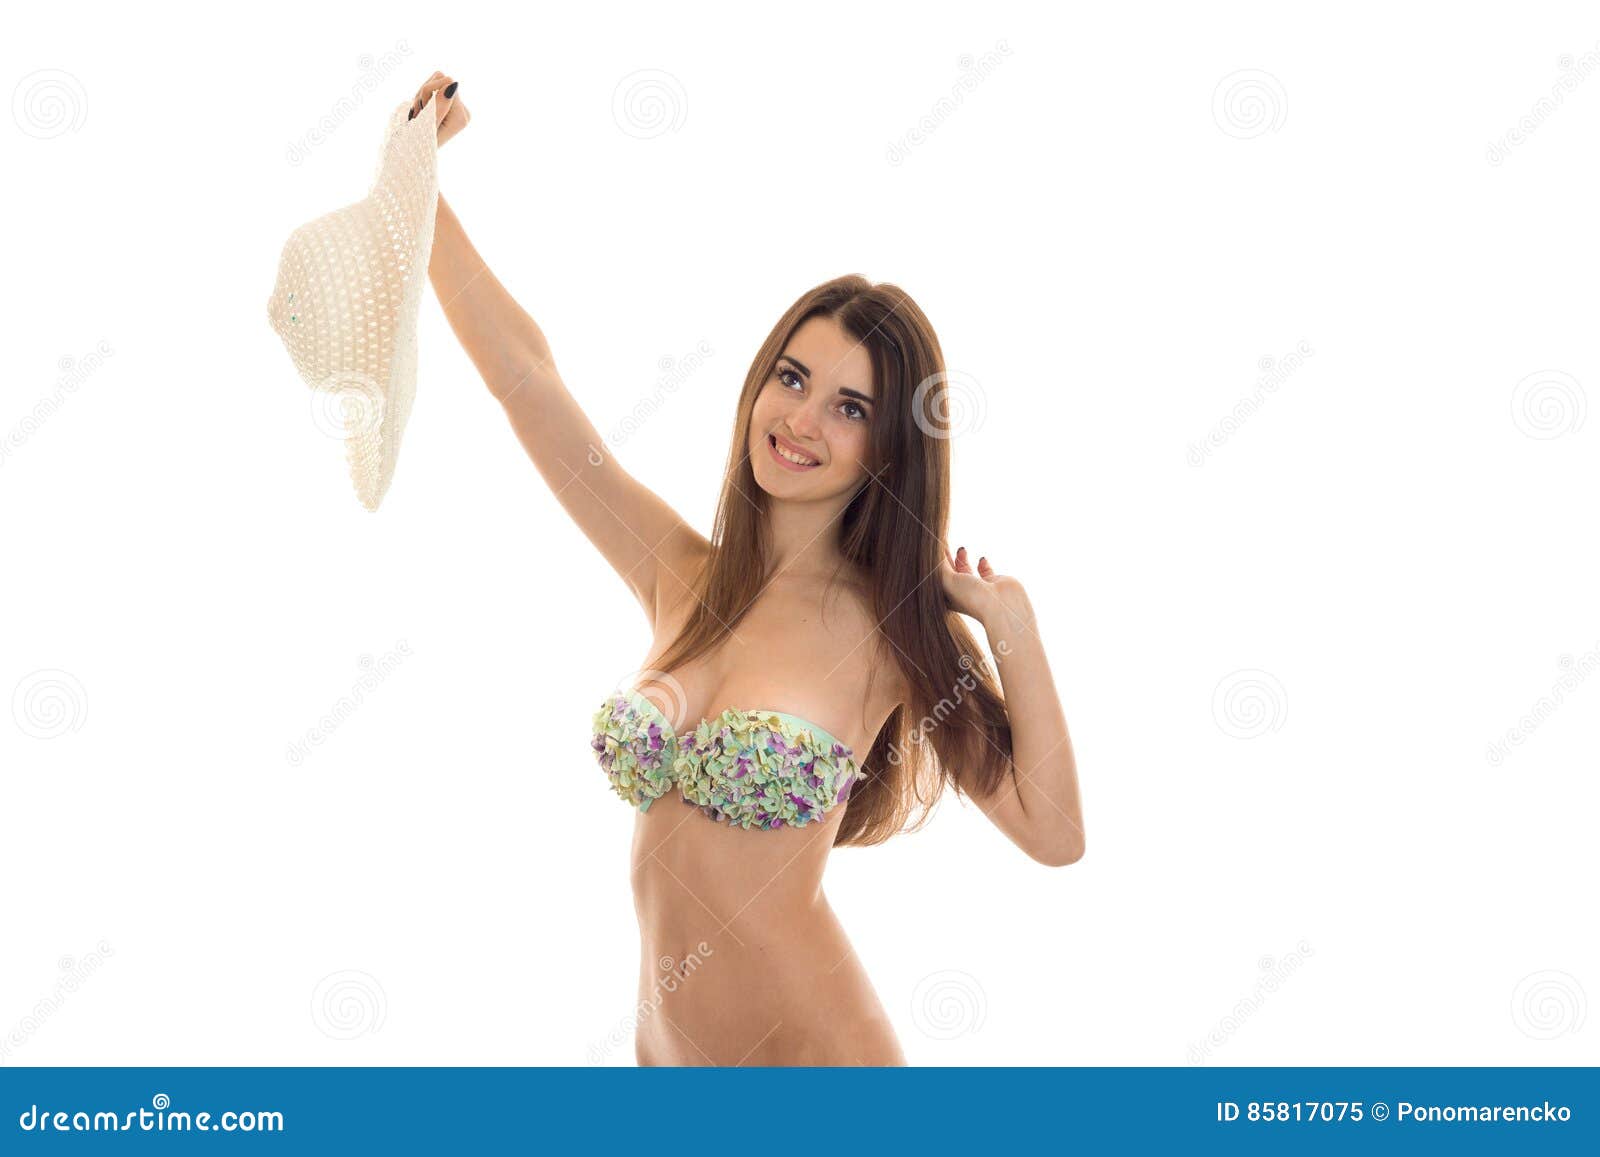 alex bandeira recommends skinny brunette big tits pic